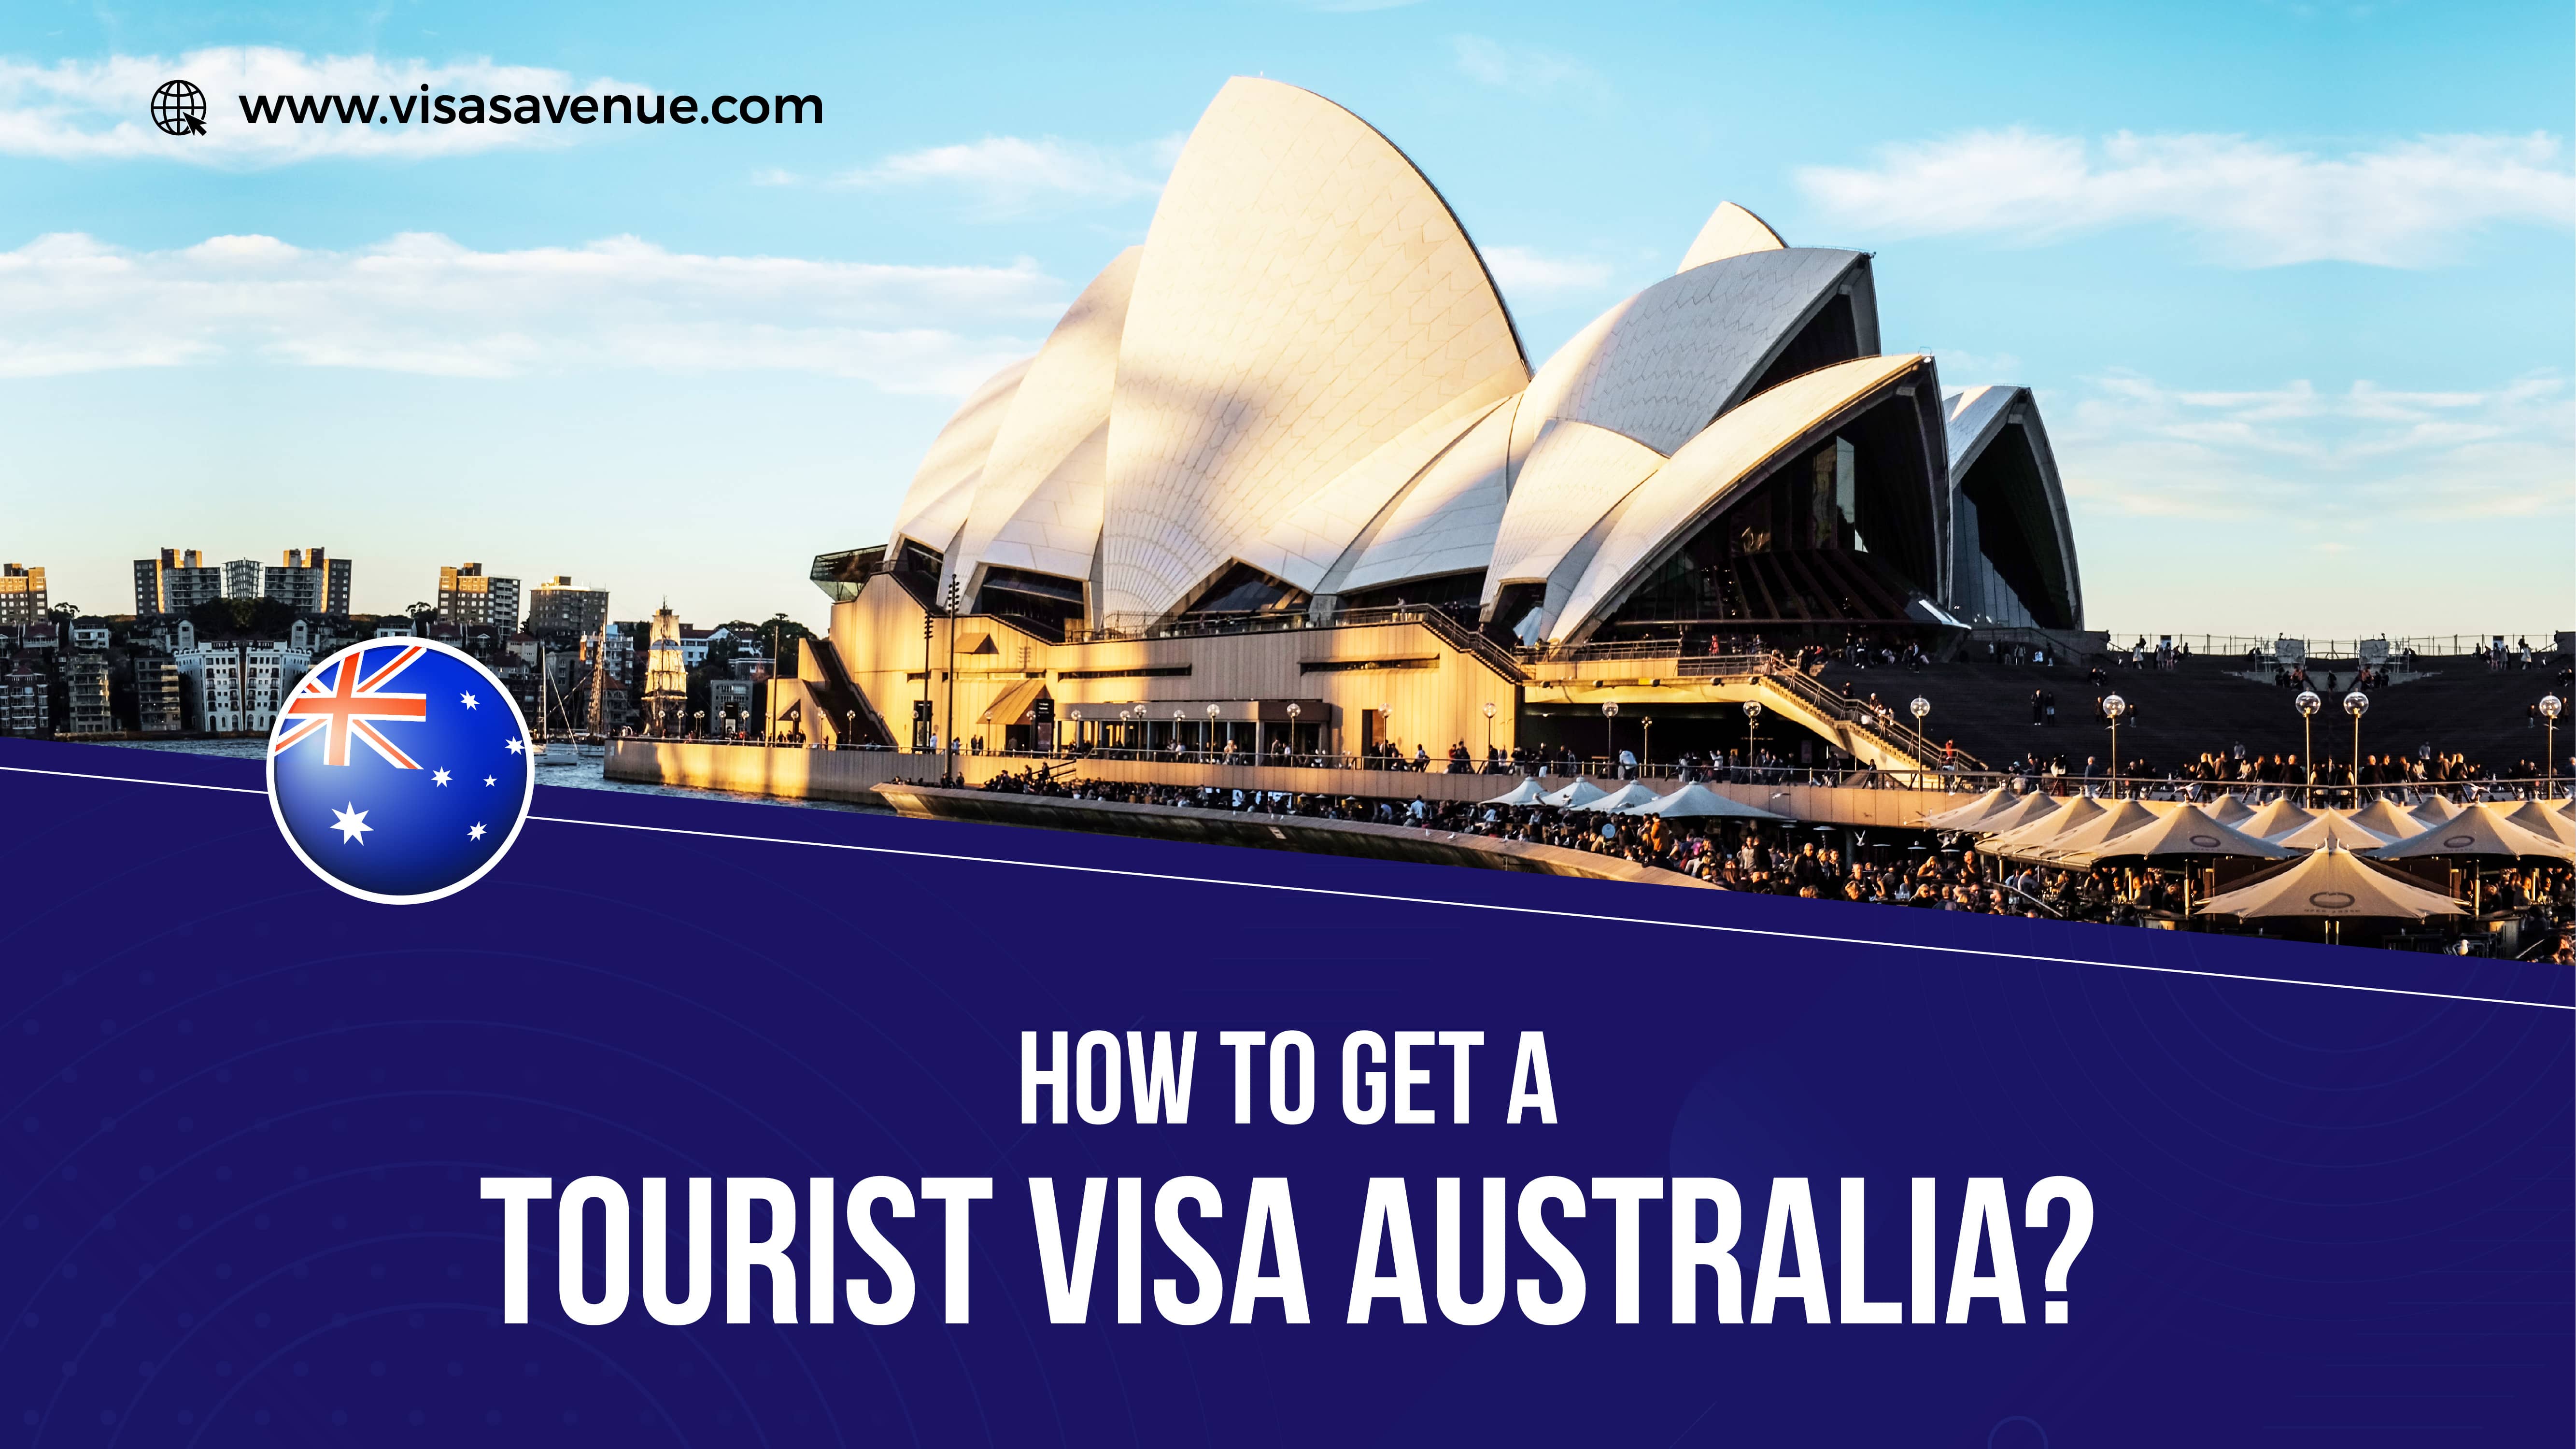 How to Get Tourist Visa Australia?